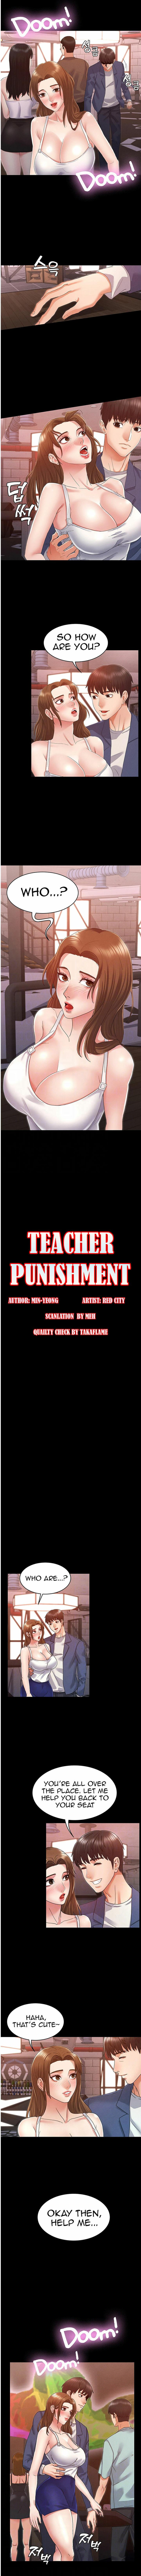 TEACHER PUNISHMENT Ch.1-9 11